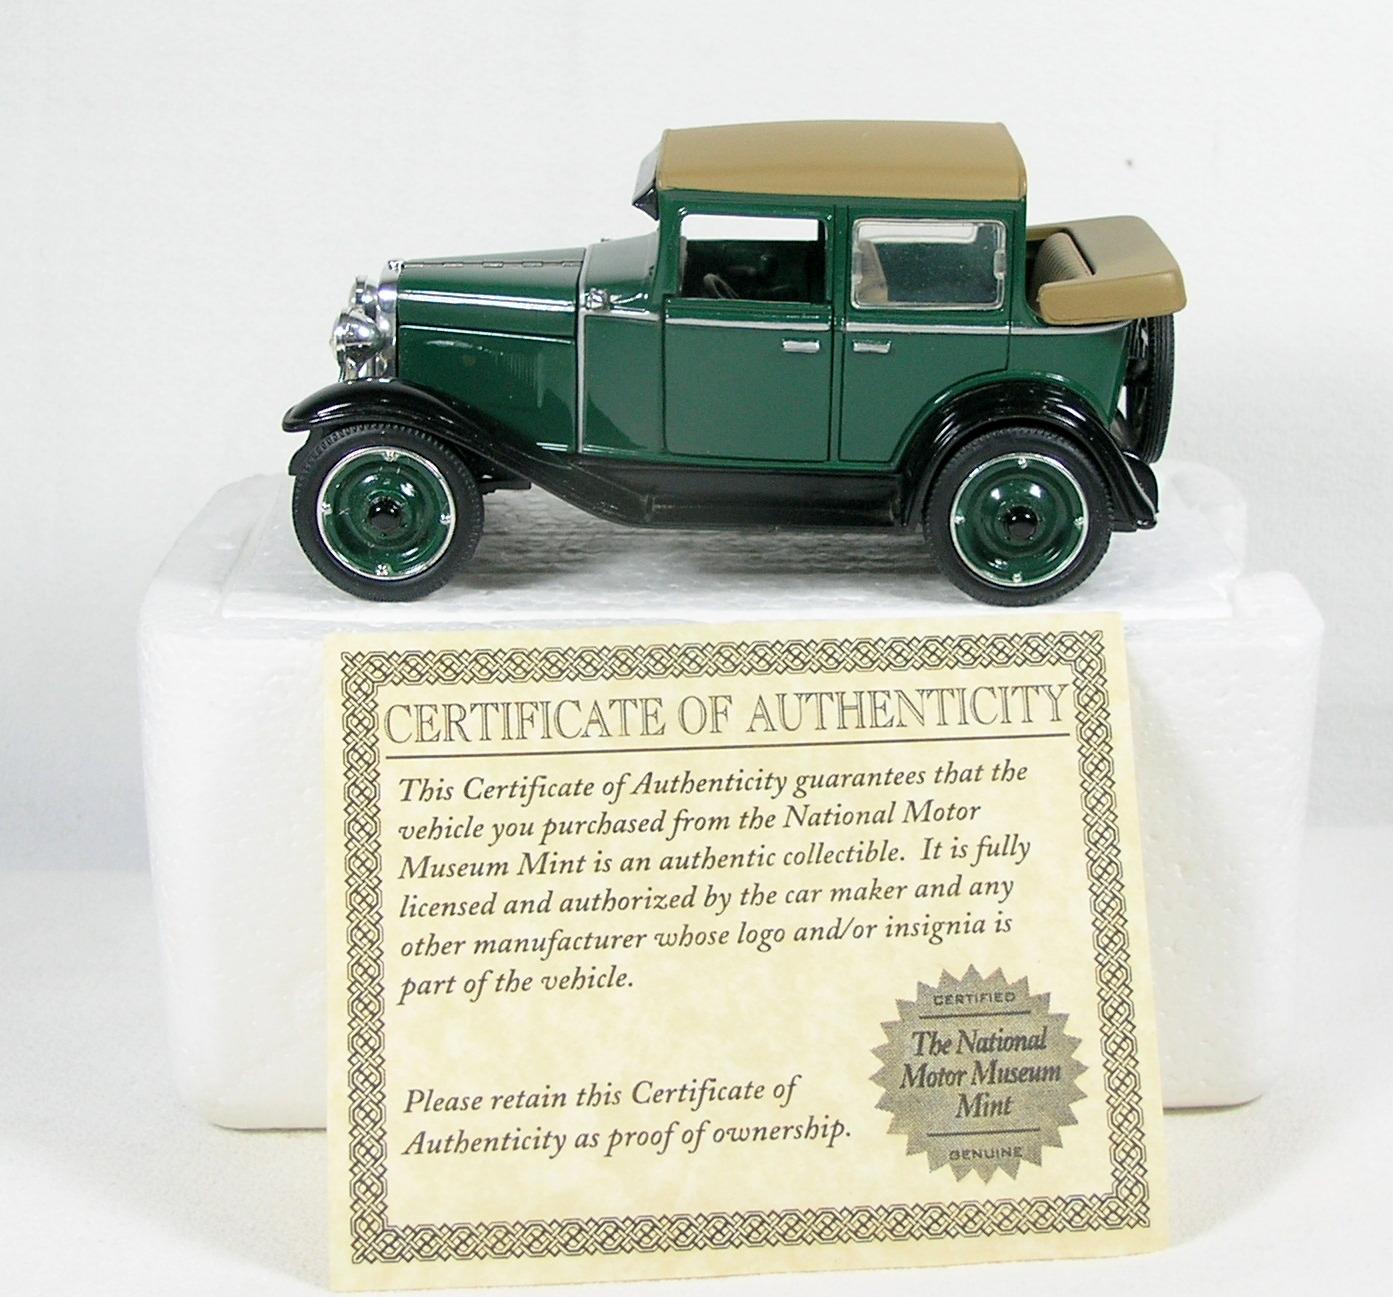 Diecast Replica of 1929 Chevy Landau Sedan From National Motor Museum Mint